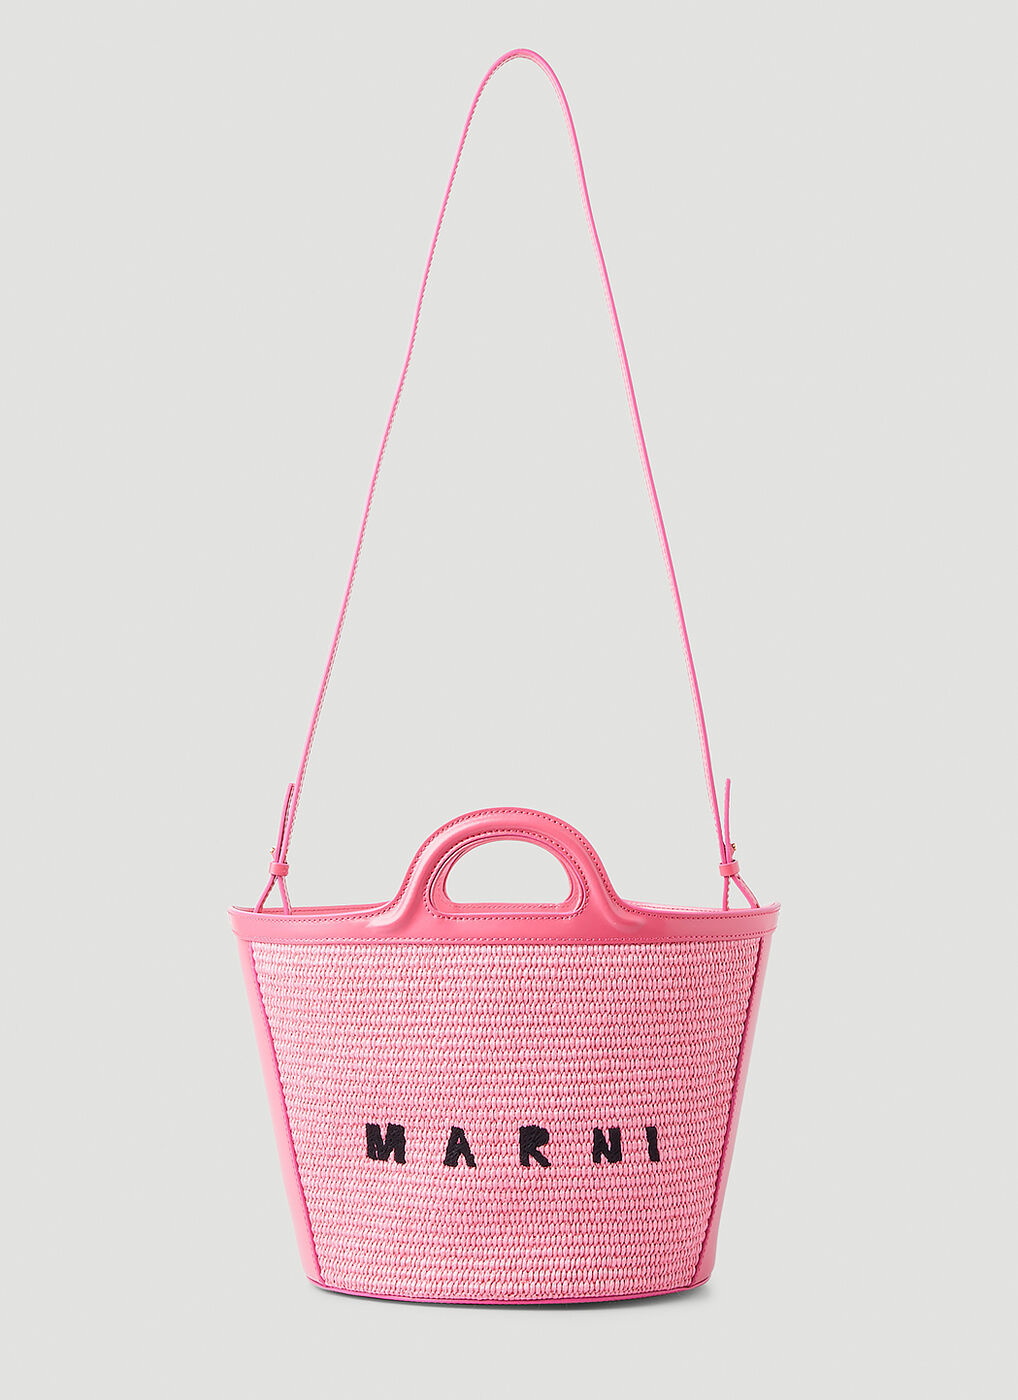 Tropicalia Small Tote Bag in Pink Marni